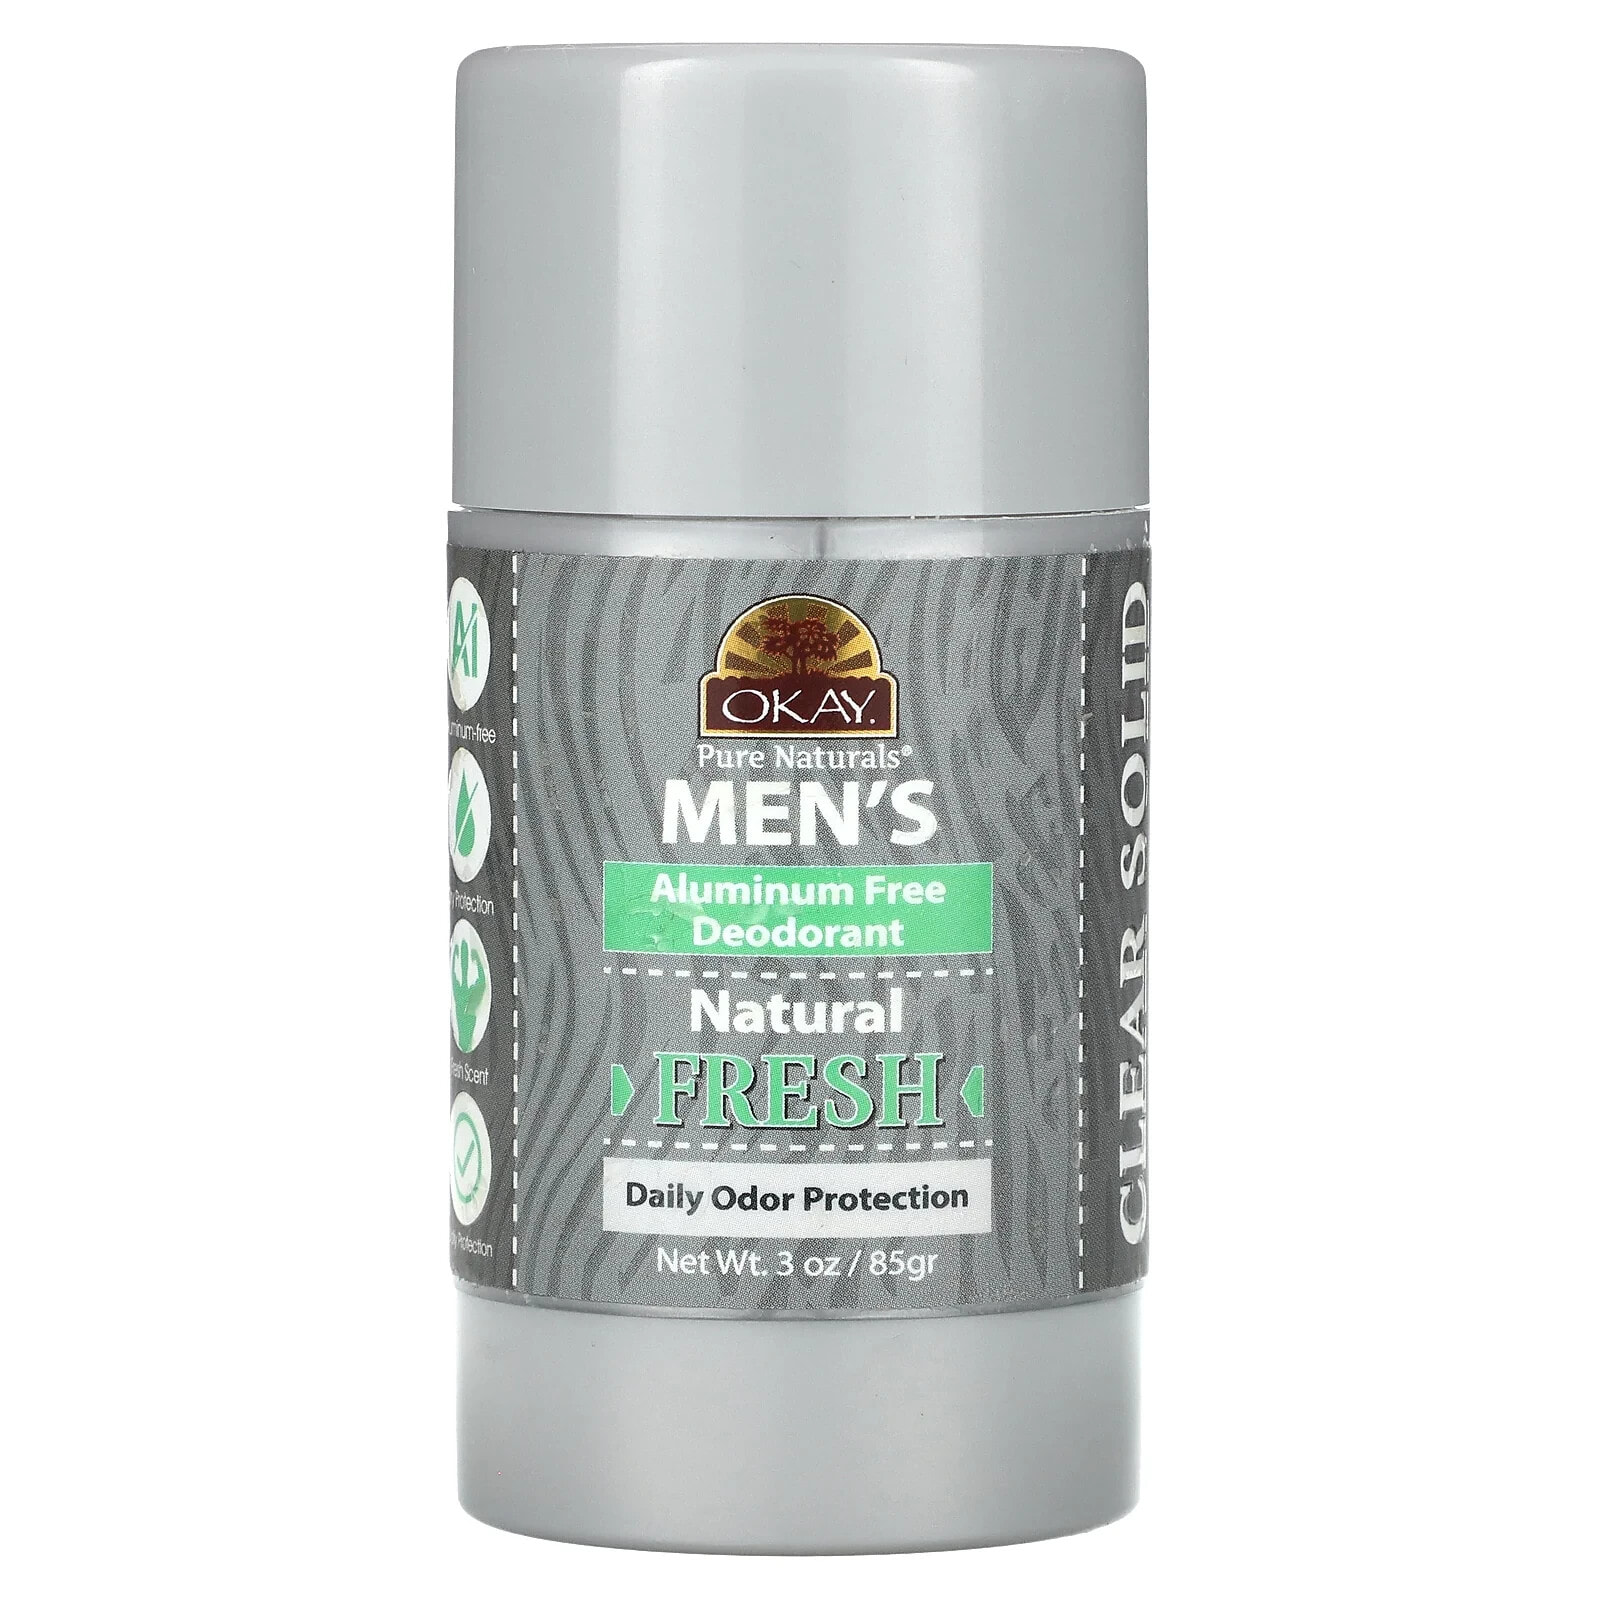 Men's, Aluminum Free Deodorant, Fresh, 3 oz (85 g)